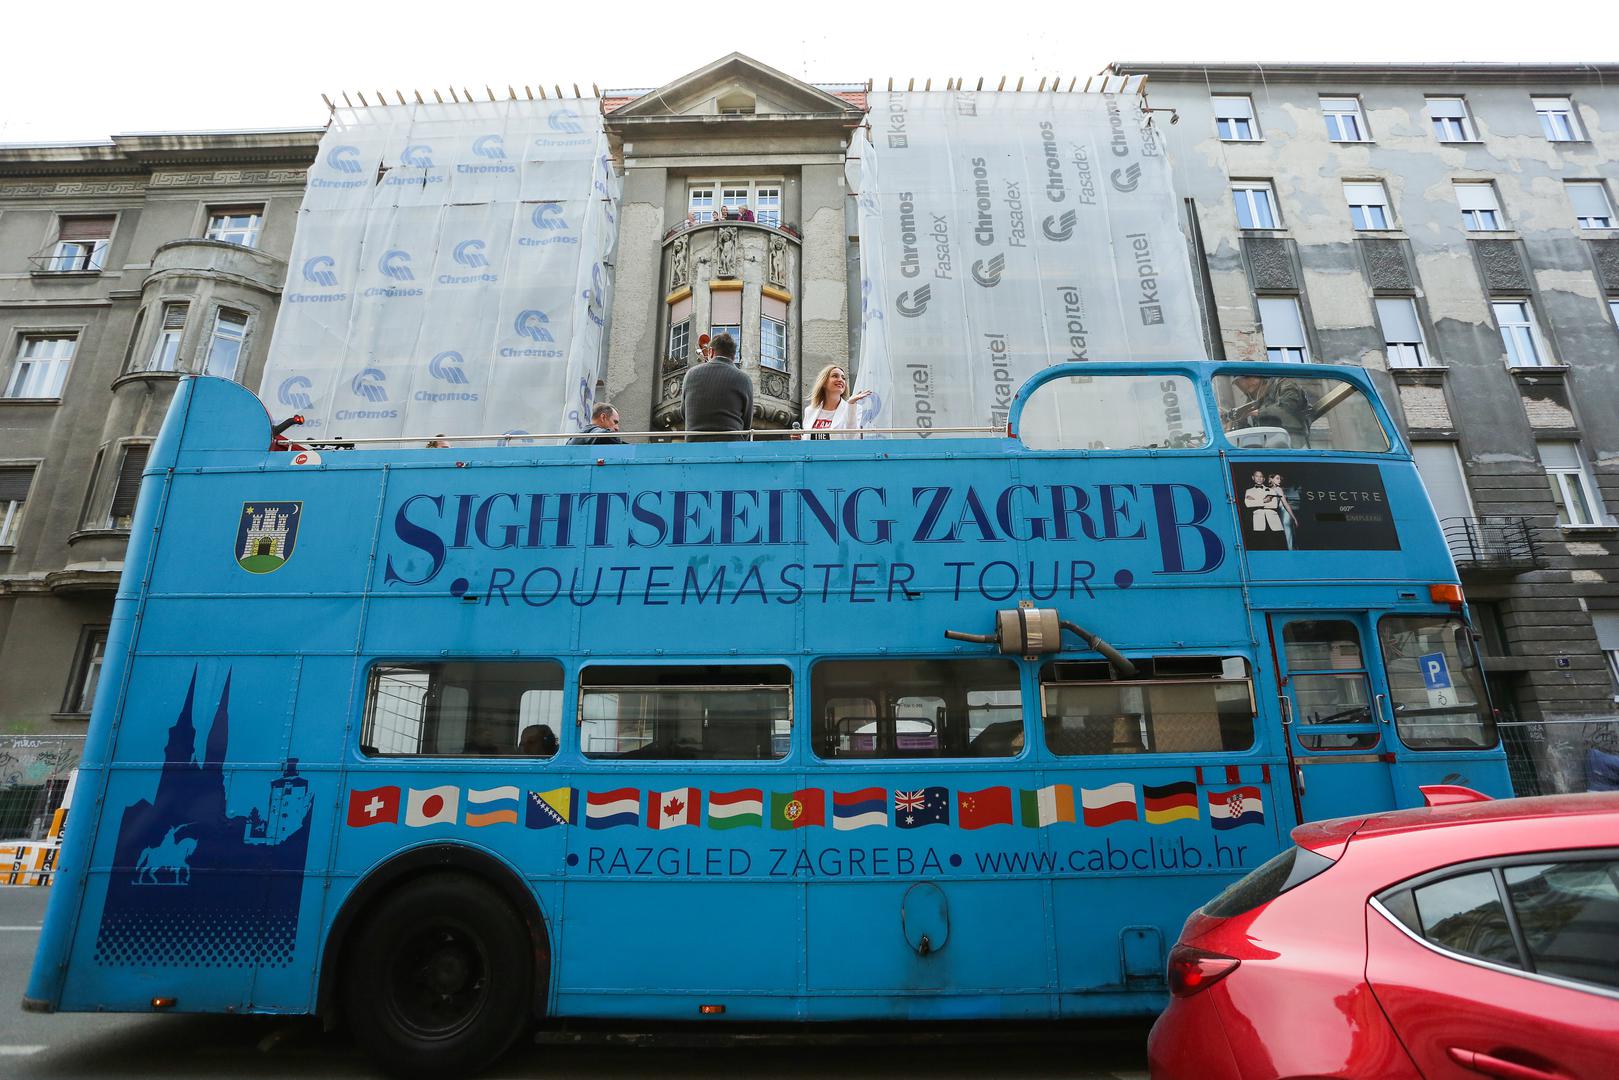 Članovi Filmmusicorkestra danas su dobro razveselili Zagrepčane koncertom kojeg su održali na krovu turističkog autobusa.